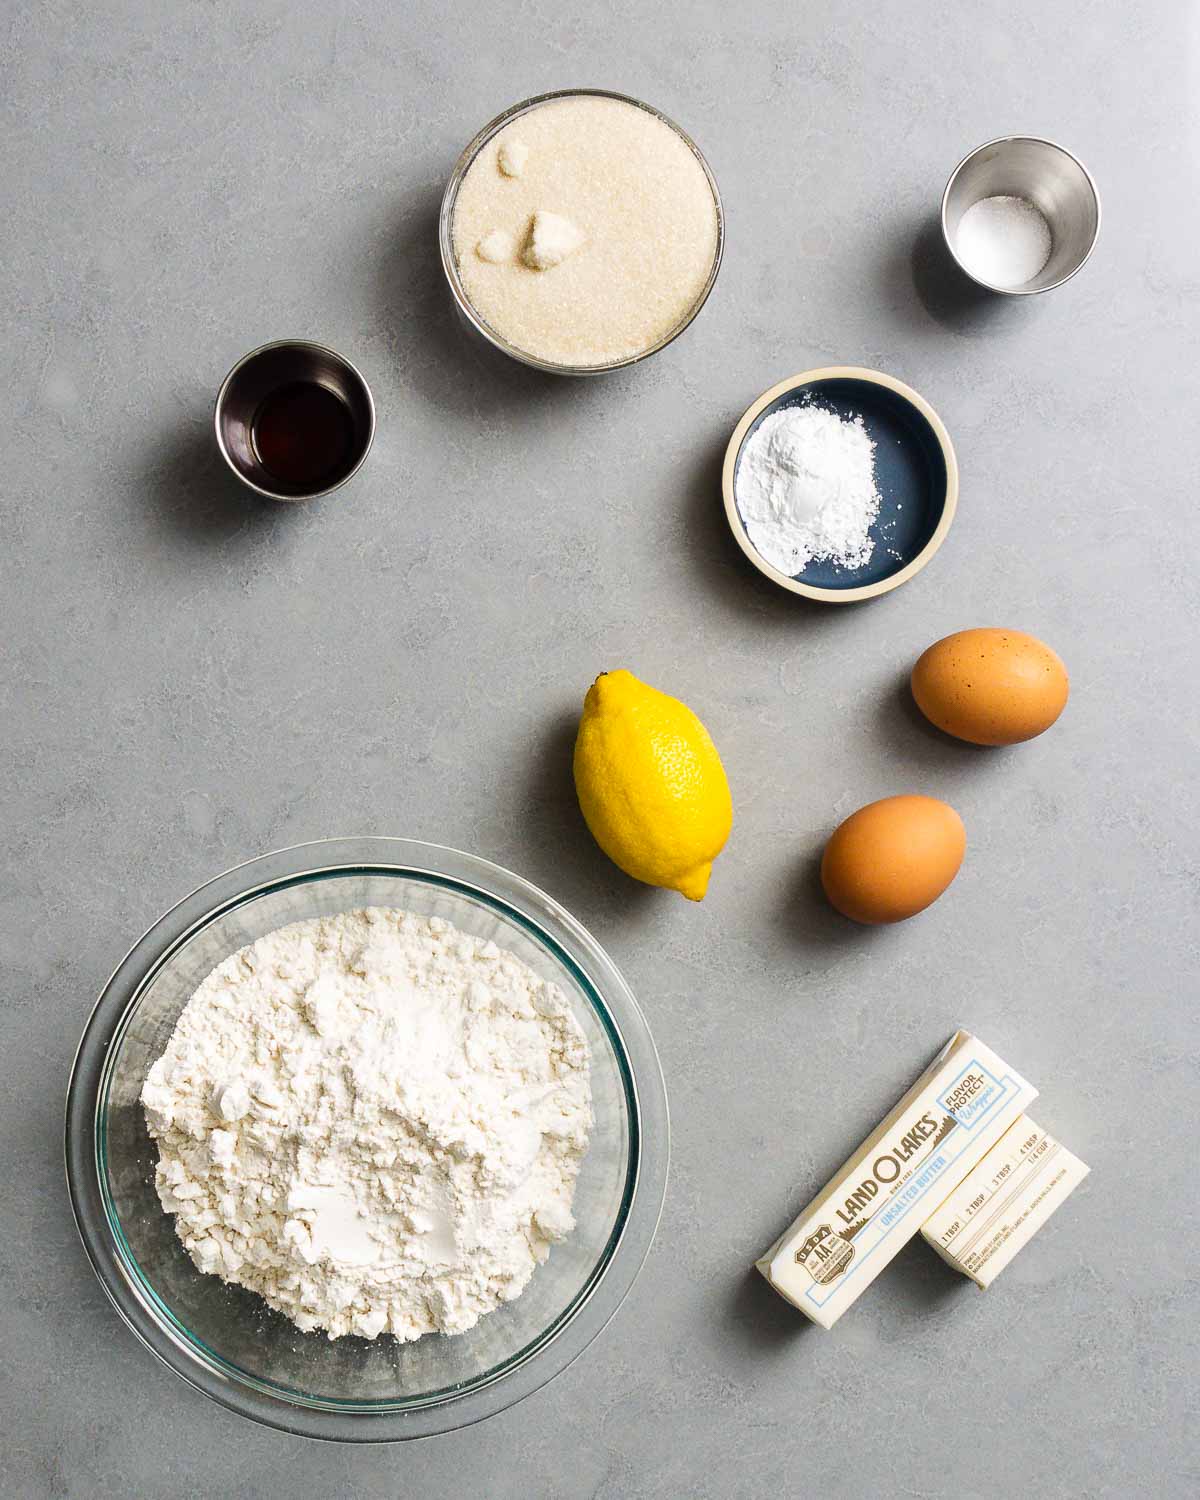 Ingredients shown: vanilla, sugar, salt, baking powder, lemon, eggs, flour, and butter.